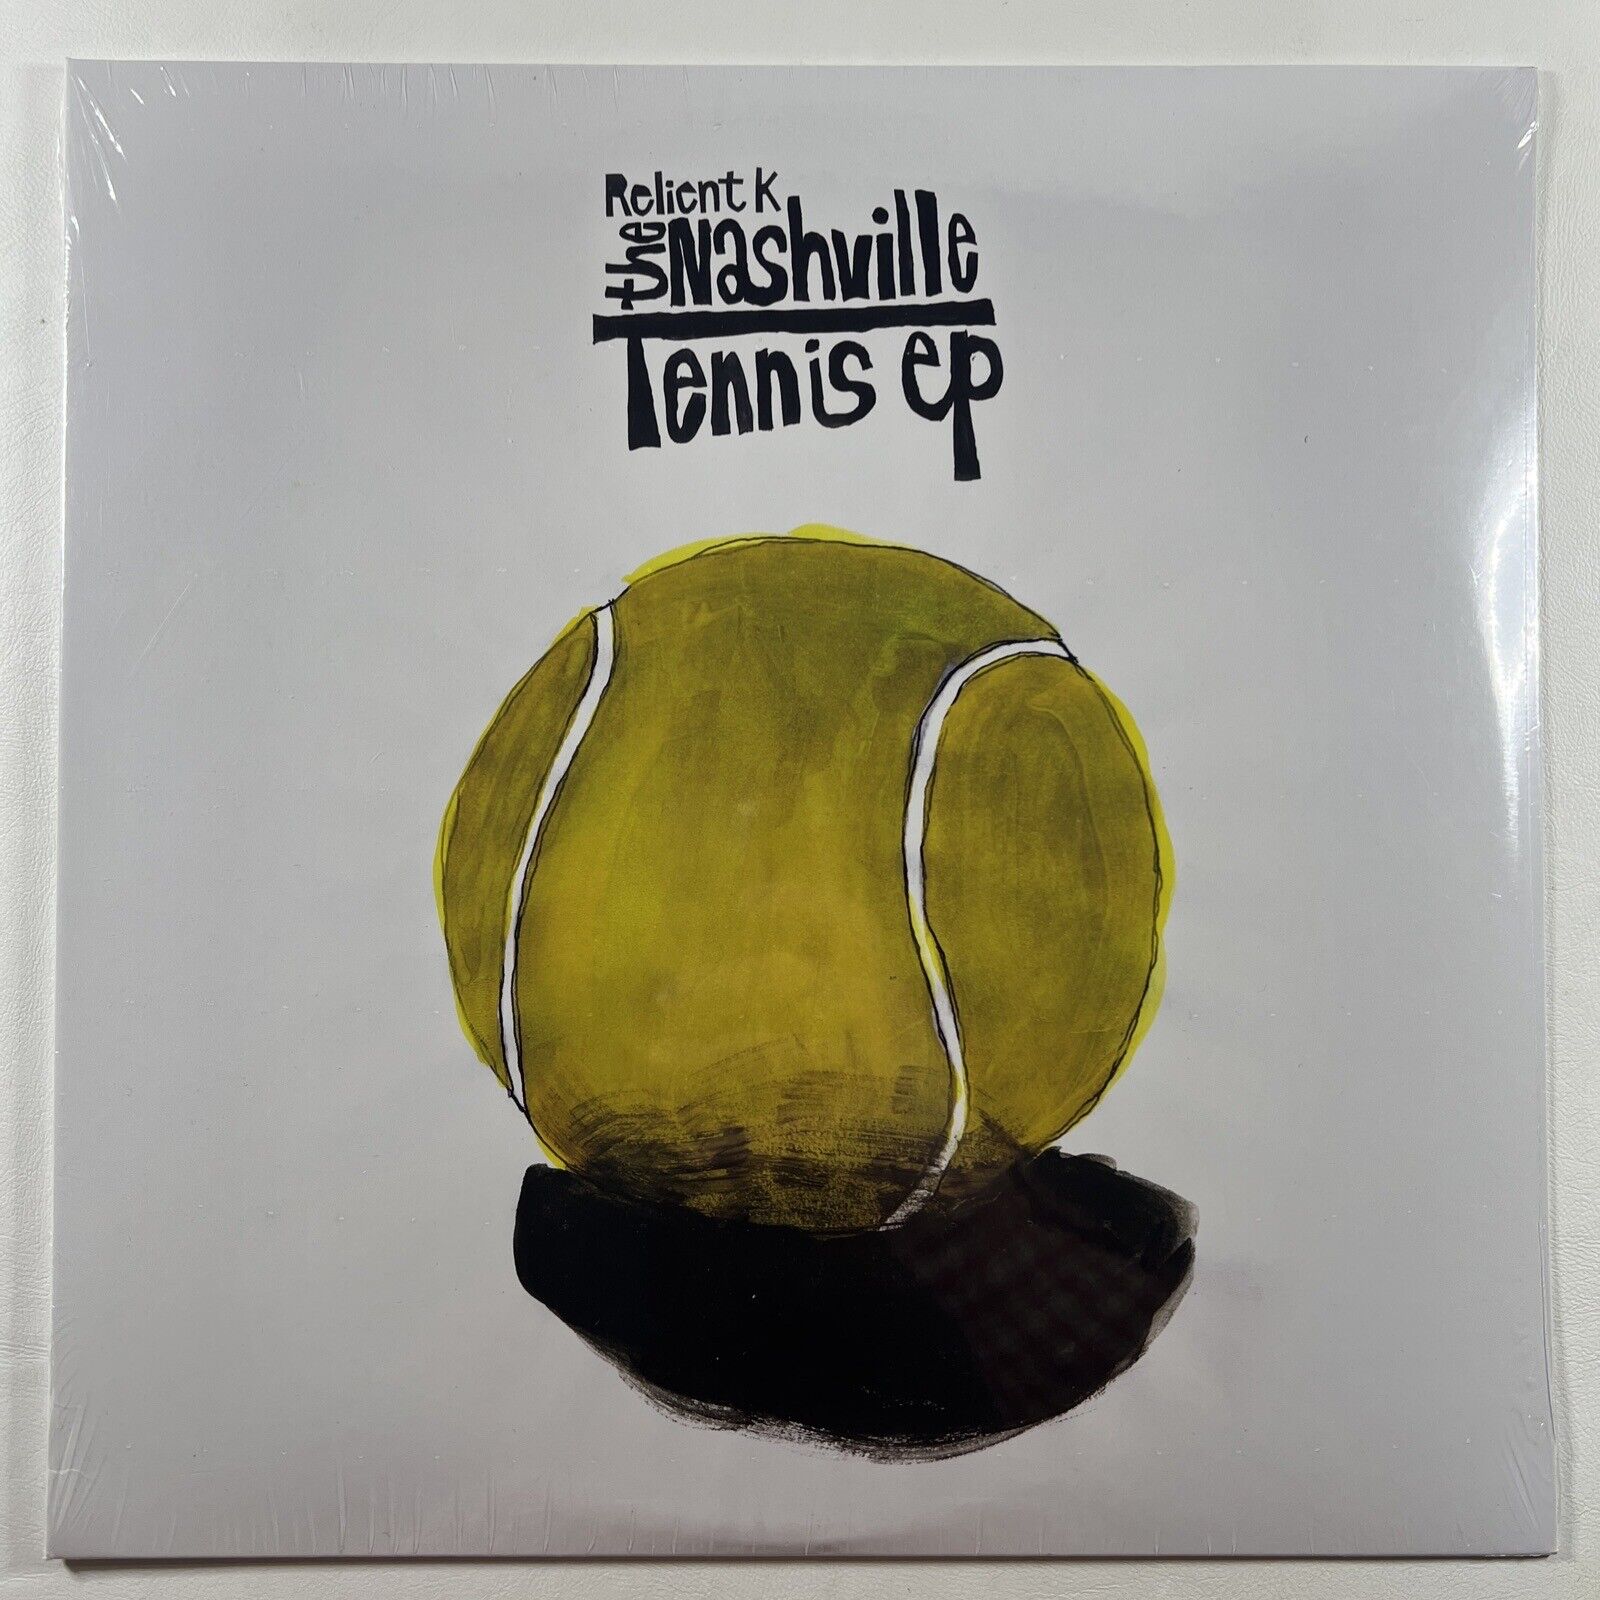 Relient K “The Nashville Tennis ep” LP/SMLXL (Sealed) Yellow Vinyl 2017 300 Lim.